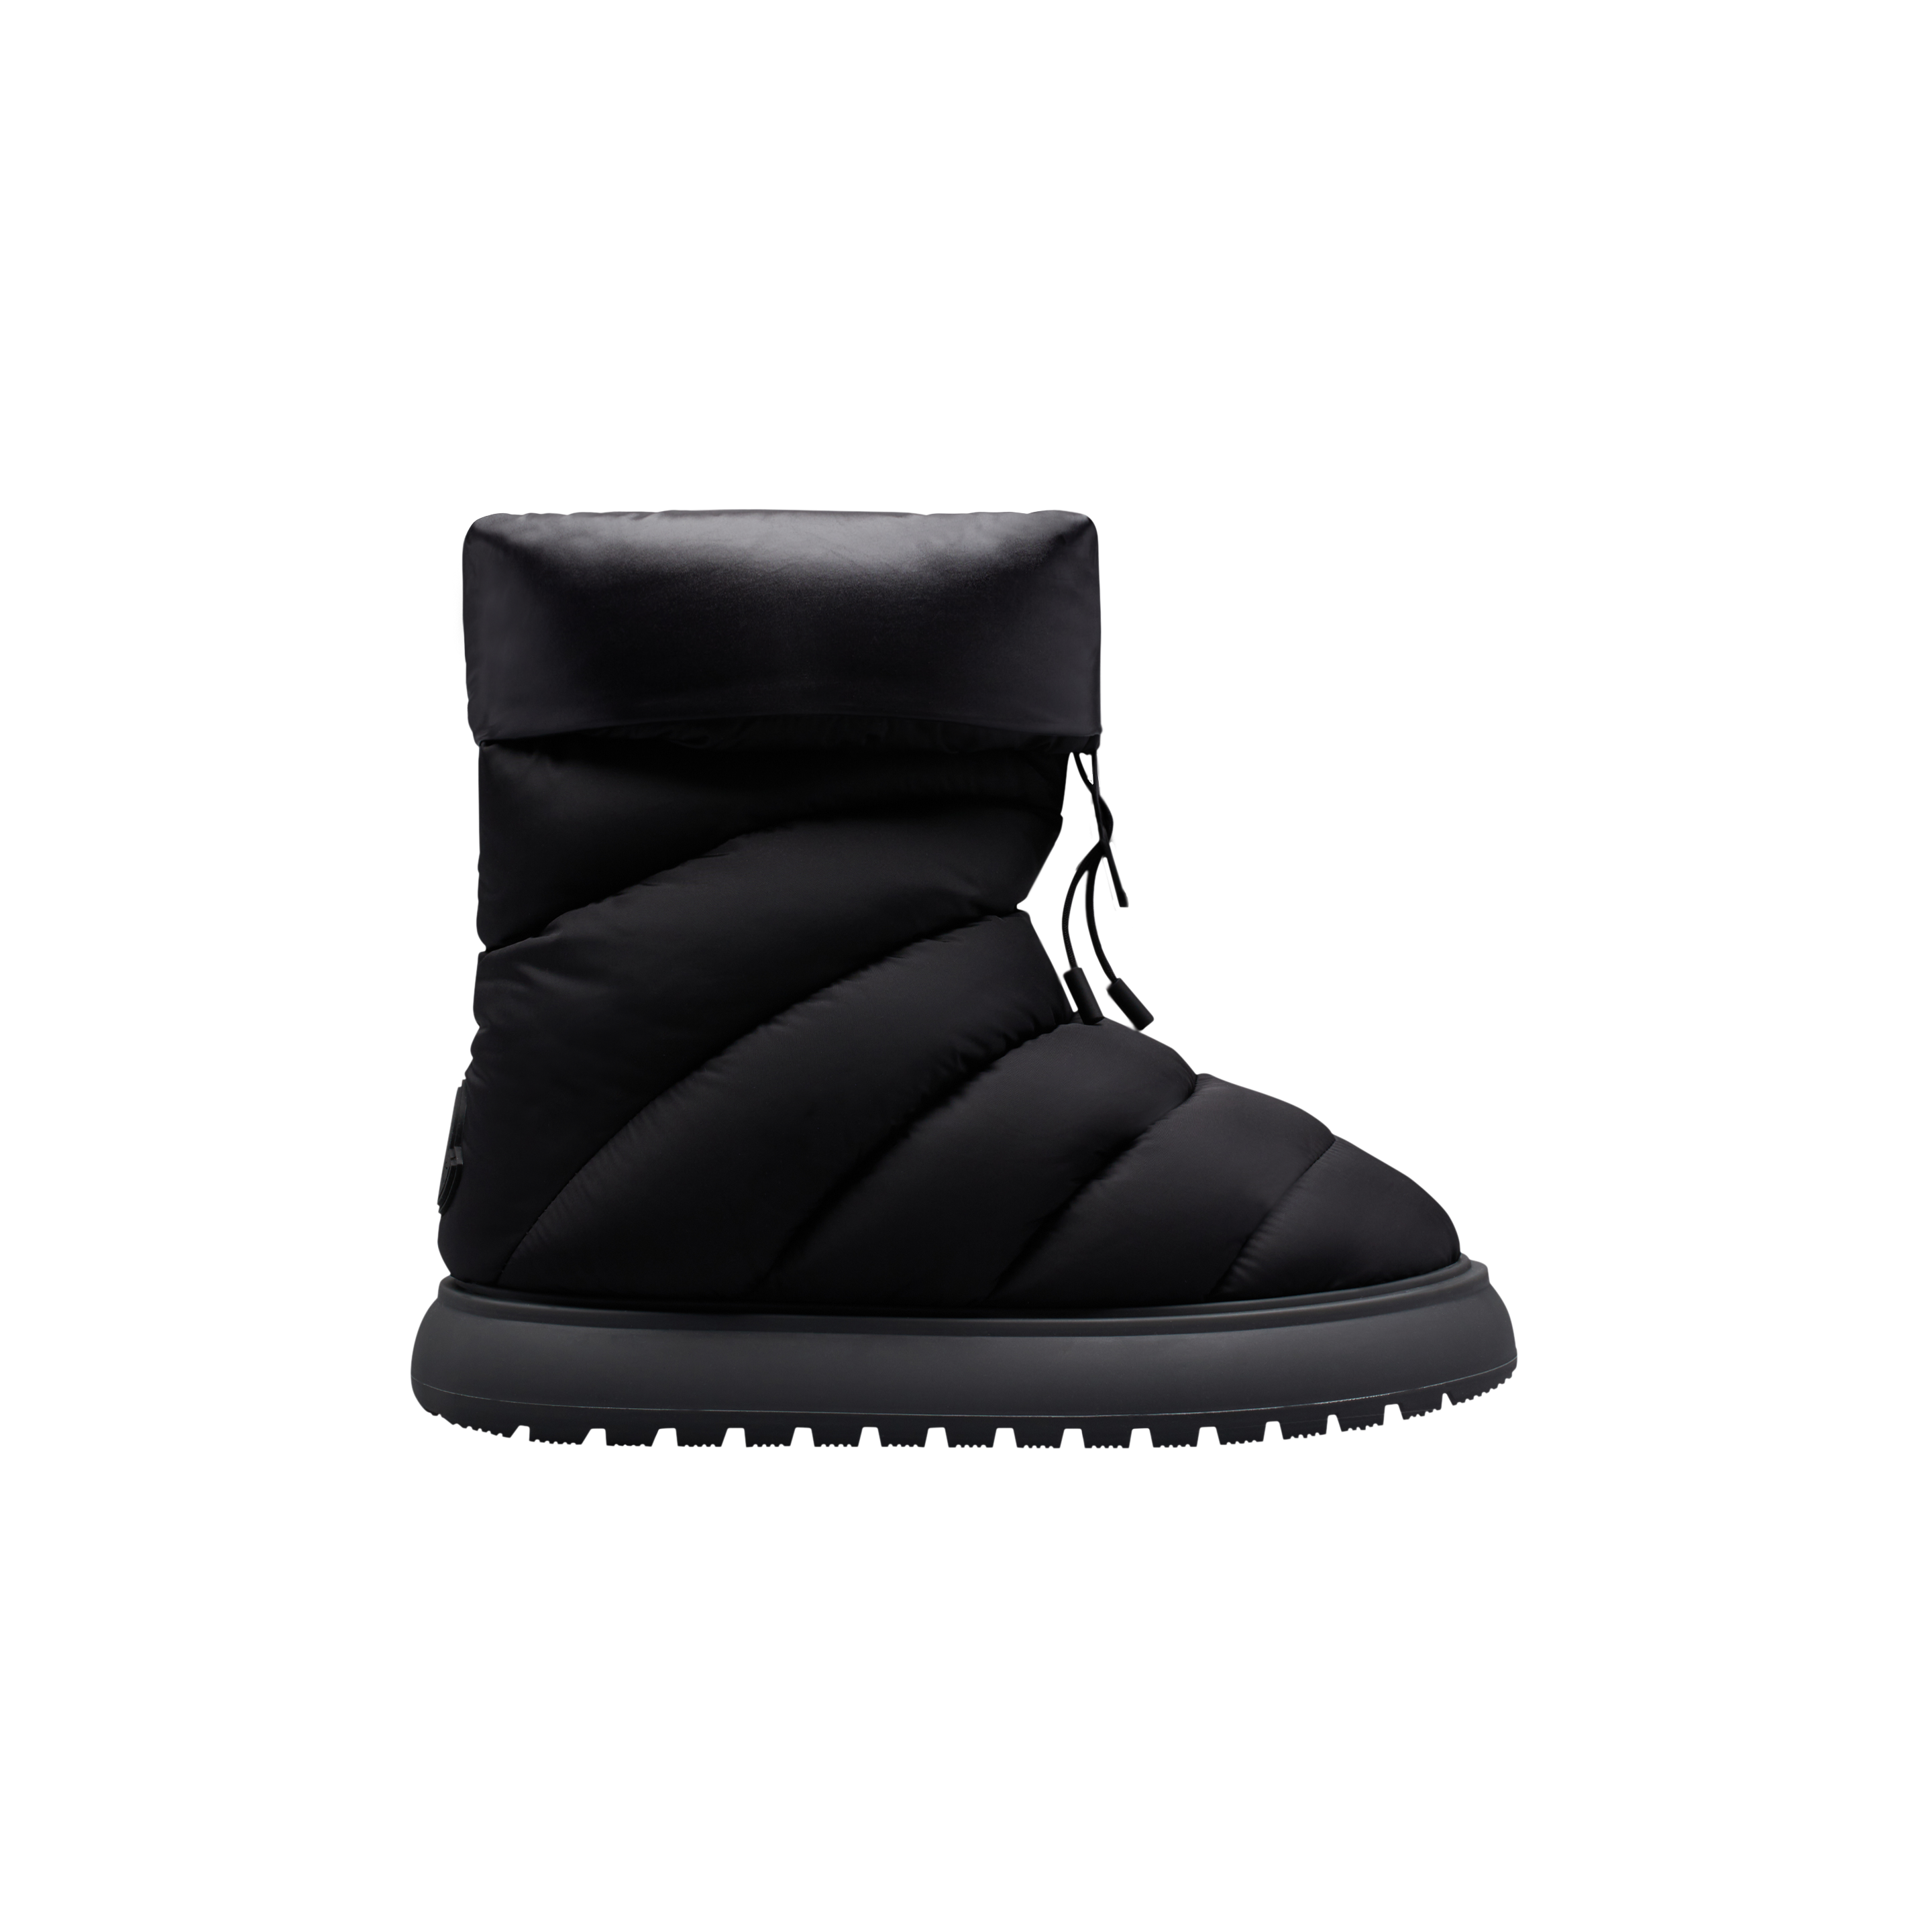 Moncler Collection Gaia Boots Black Size 40